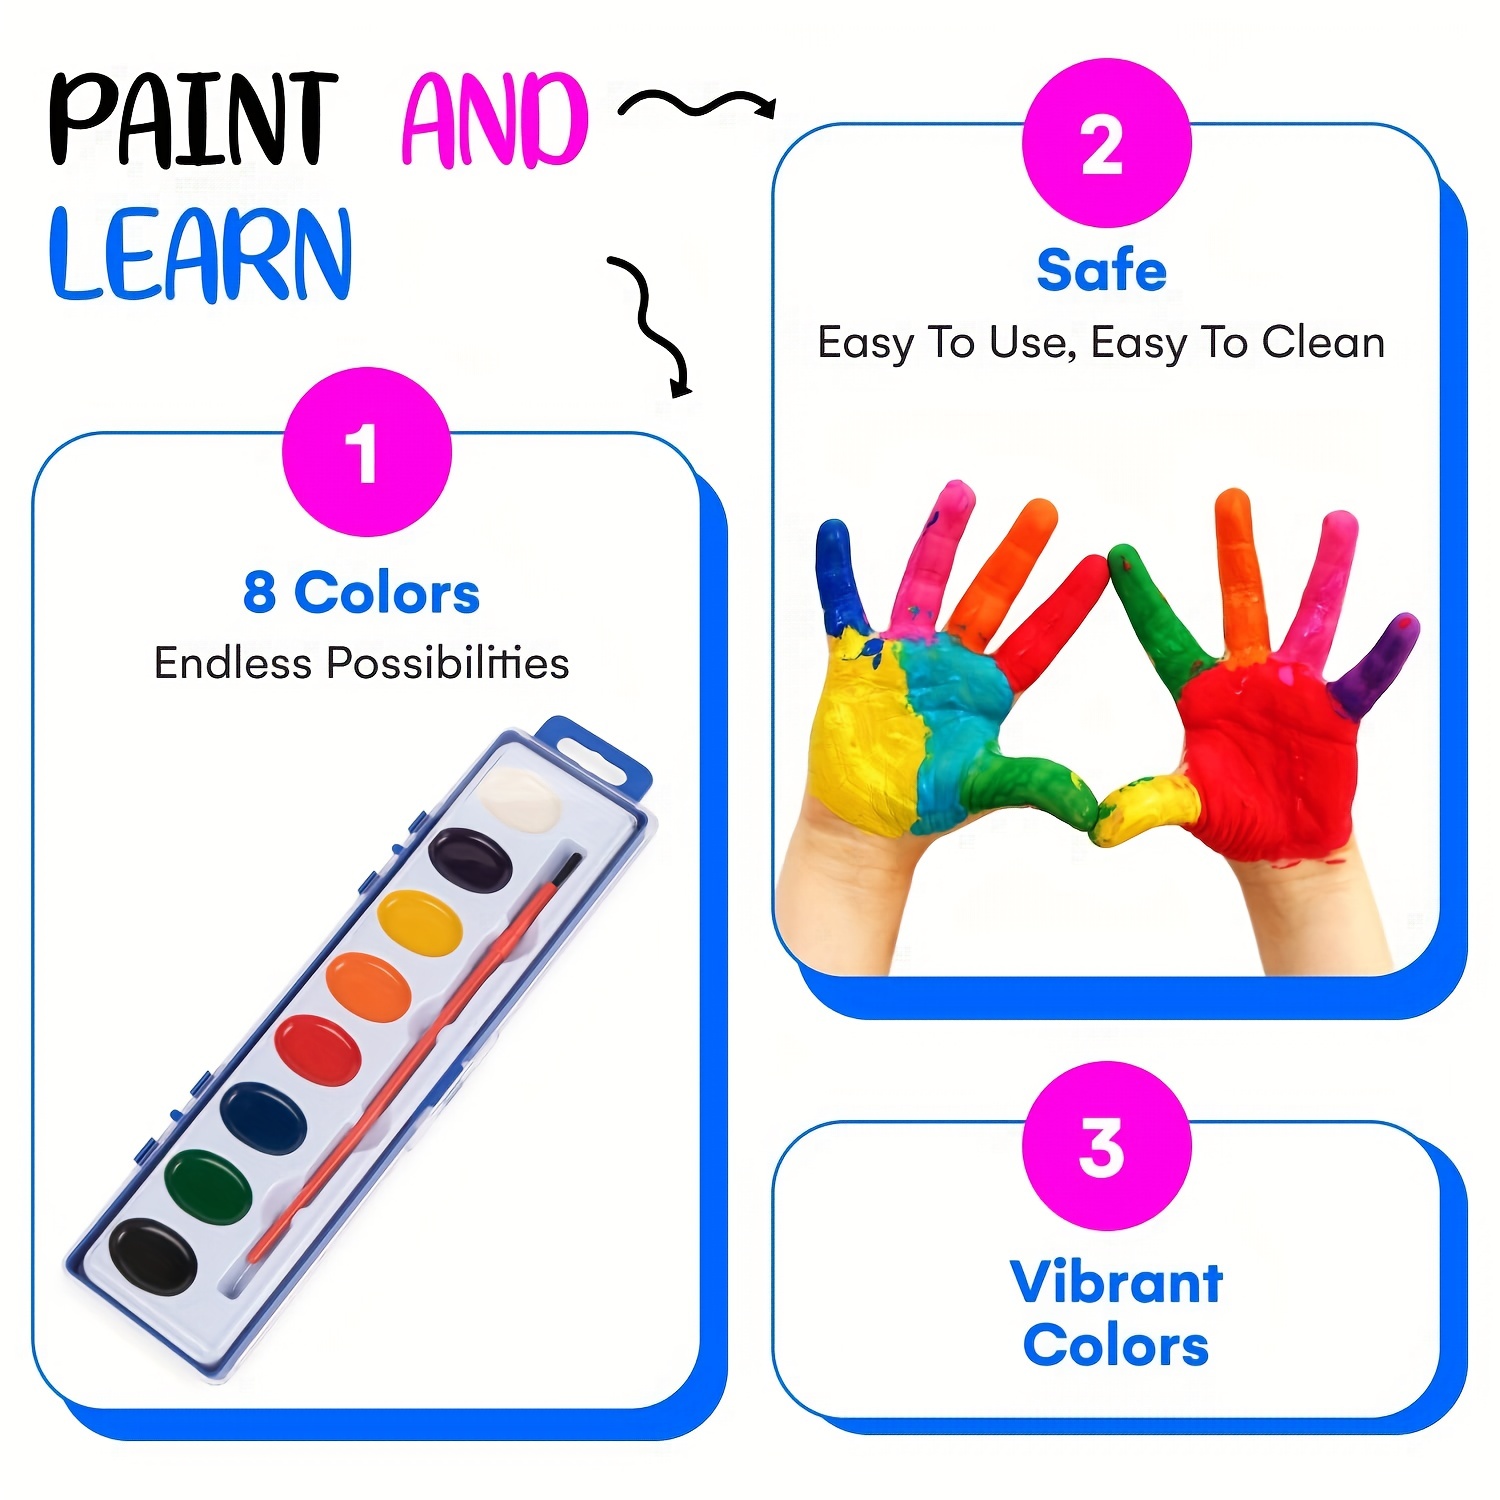 Kedudes Watercolor Paint Set for Kids - 10 Sets of 8 Color Semi-Moist Watercolor Paint Palette and Paintbrush Kits - Includes 10 Extra Paint Brushes